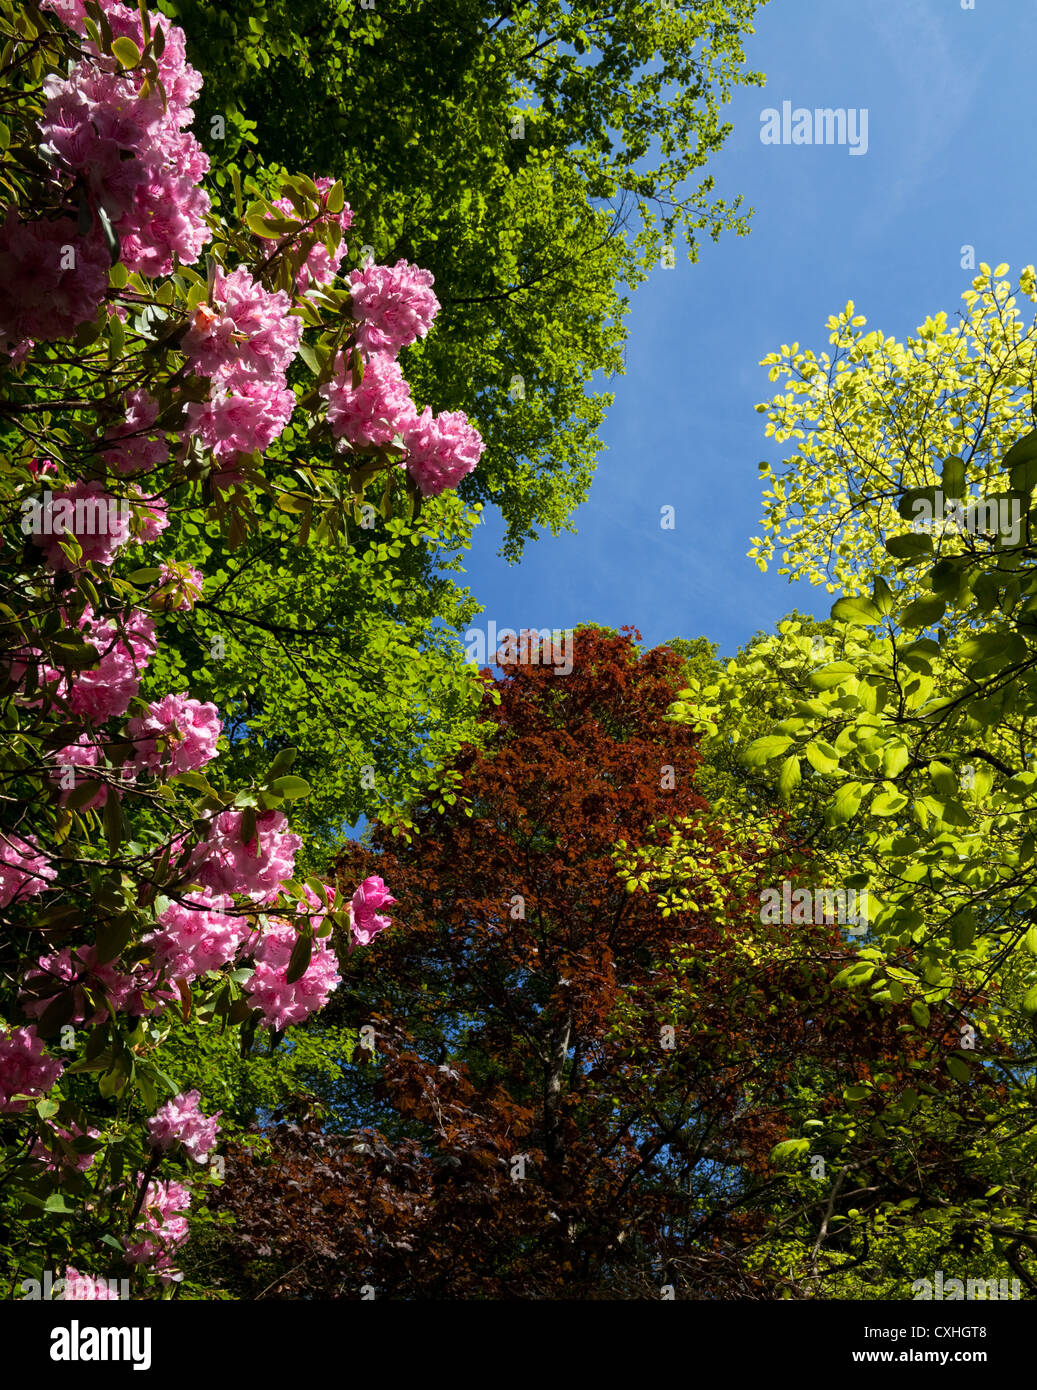 Rhodedendron Blossom, Mount Congreve Gardens, Near Kilmeaden, County Waterford, Ireland Stock Photo